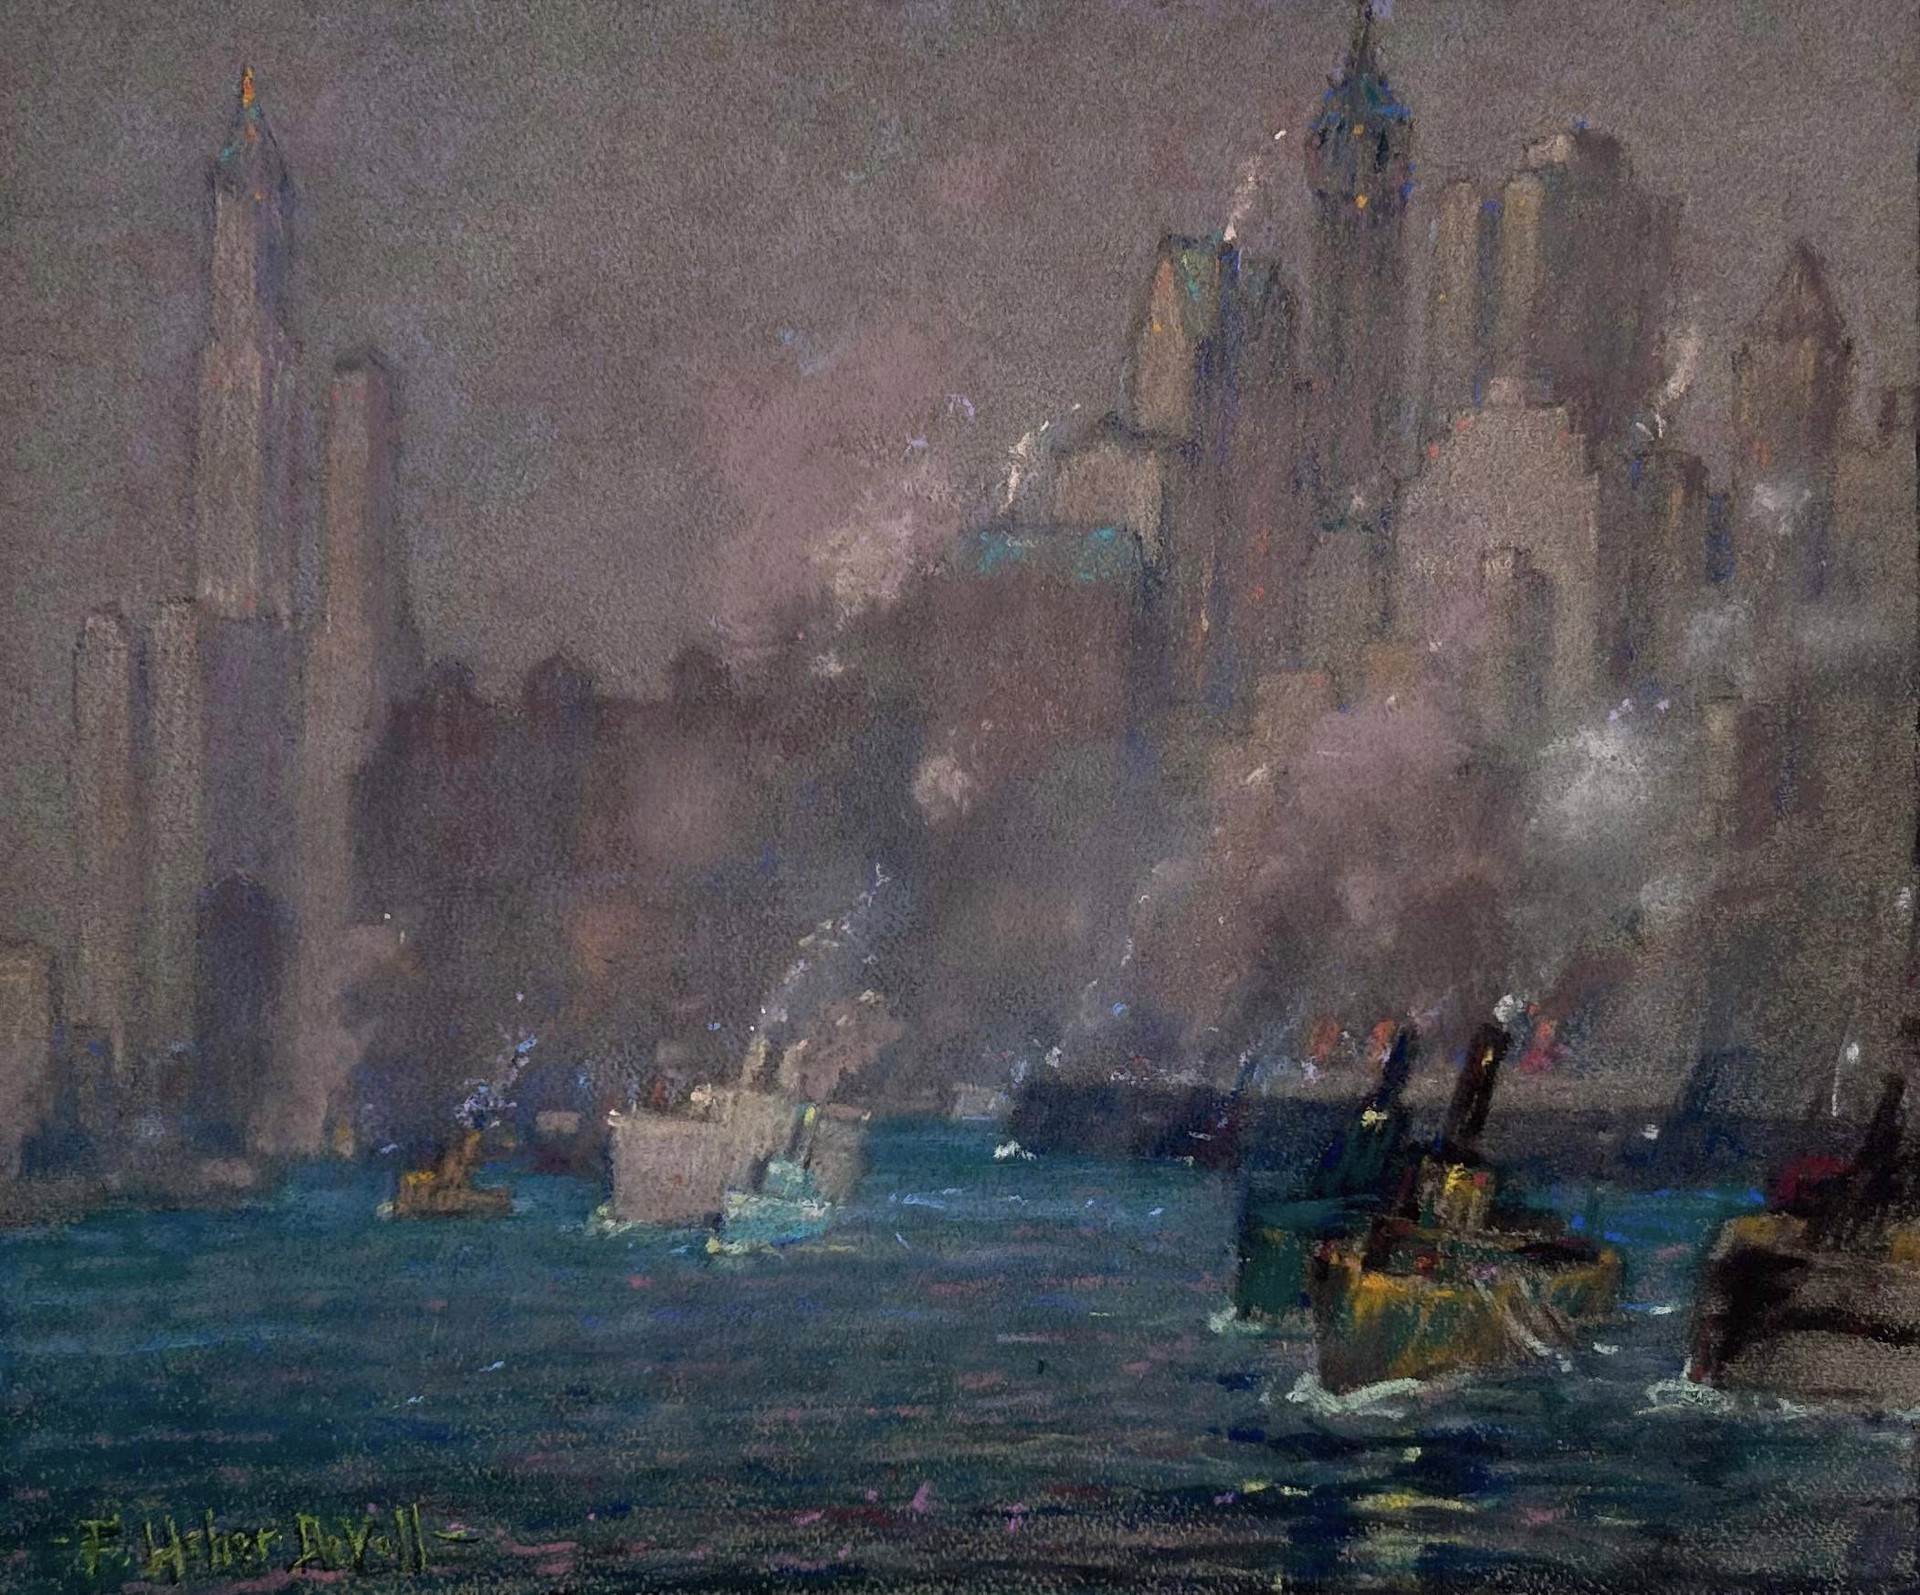 Outward Bound by Frederick Usher DeVoll (1873-1941)